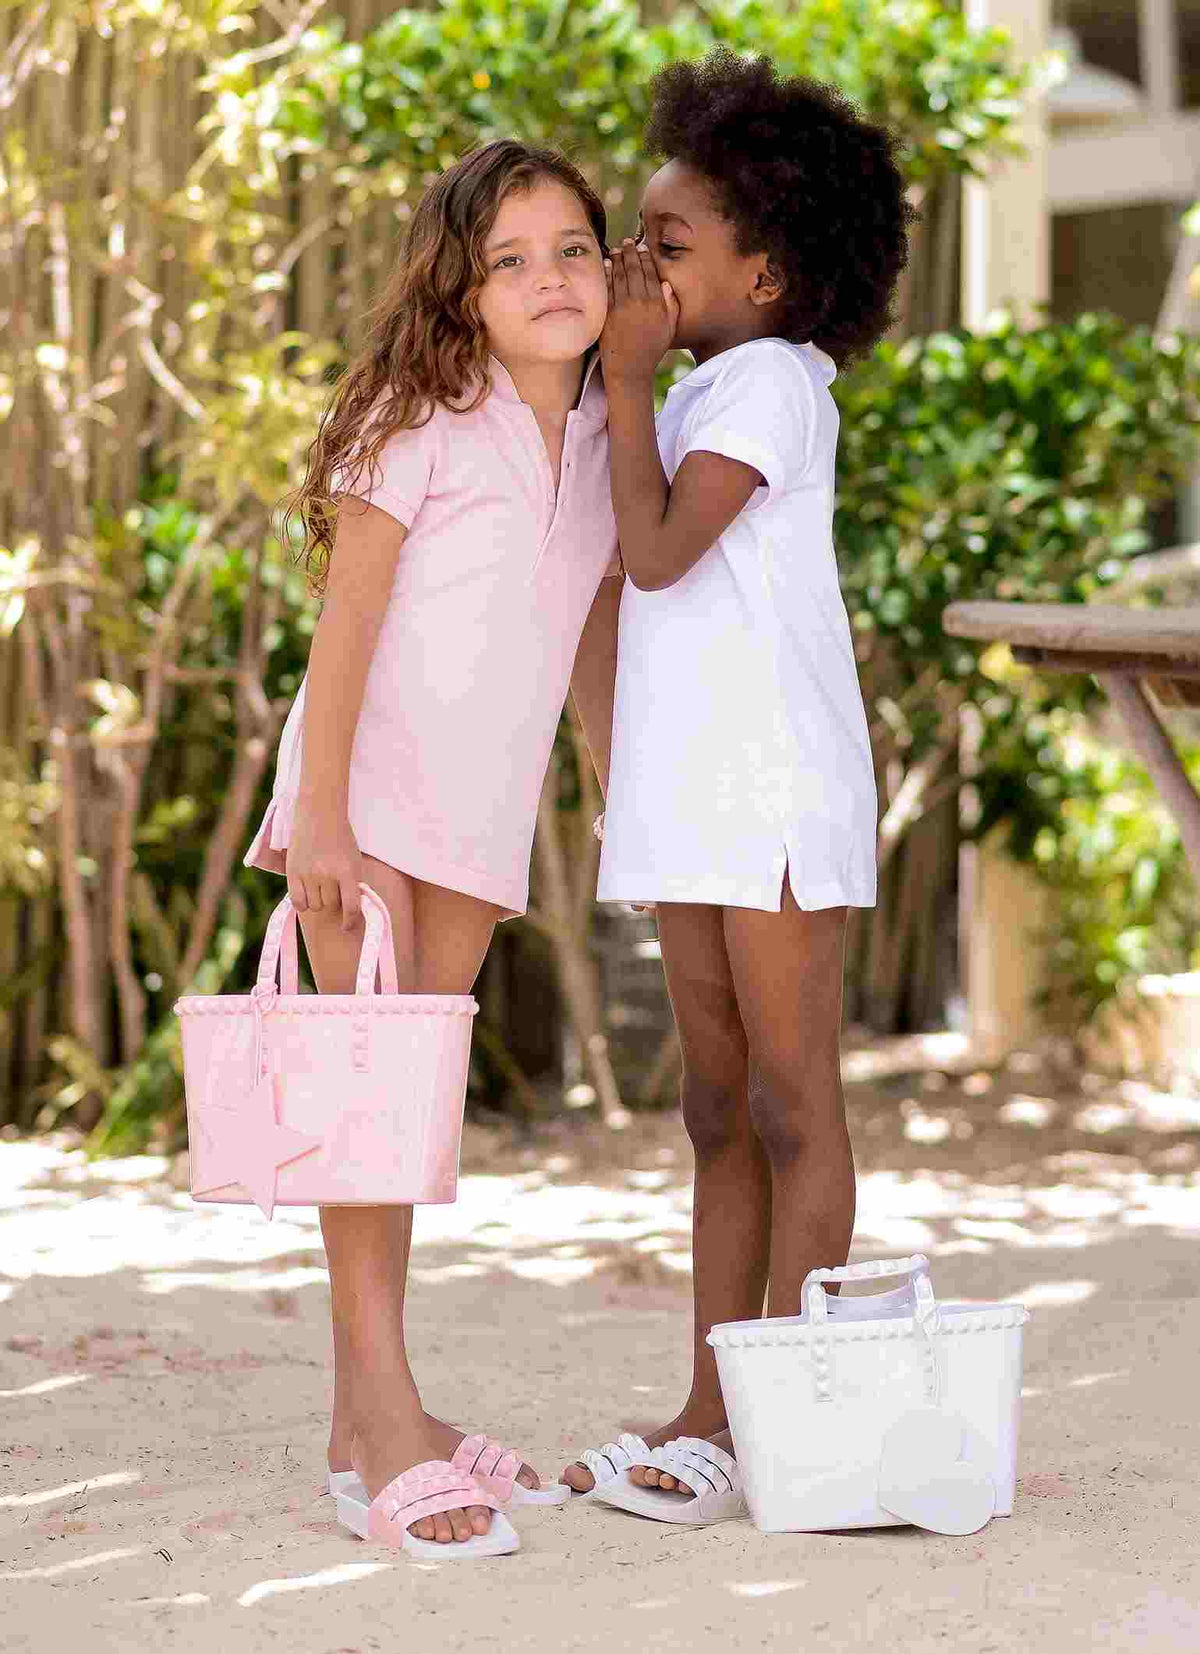 minicarmensol jelly accessories best for beach love kids, mini franco sandals, minimelissa bags.